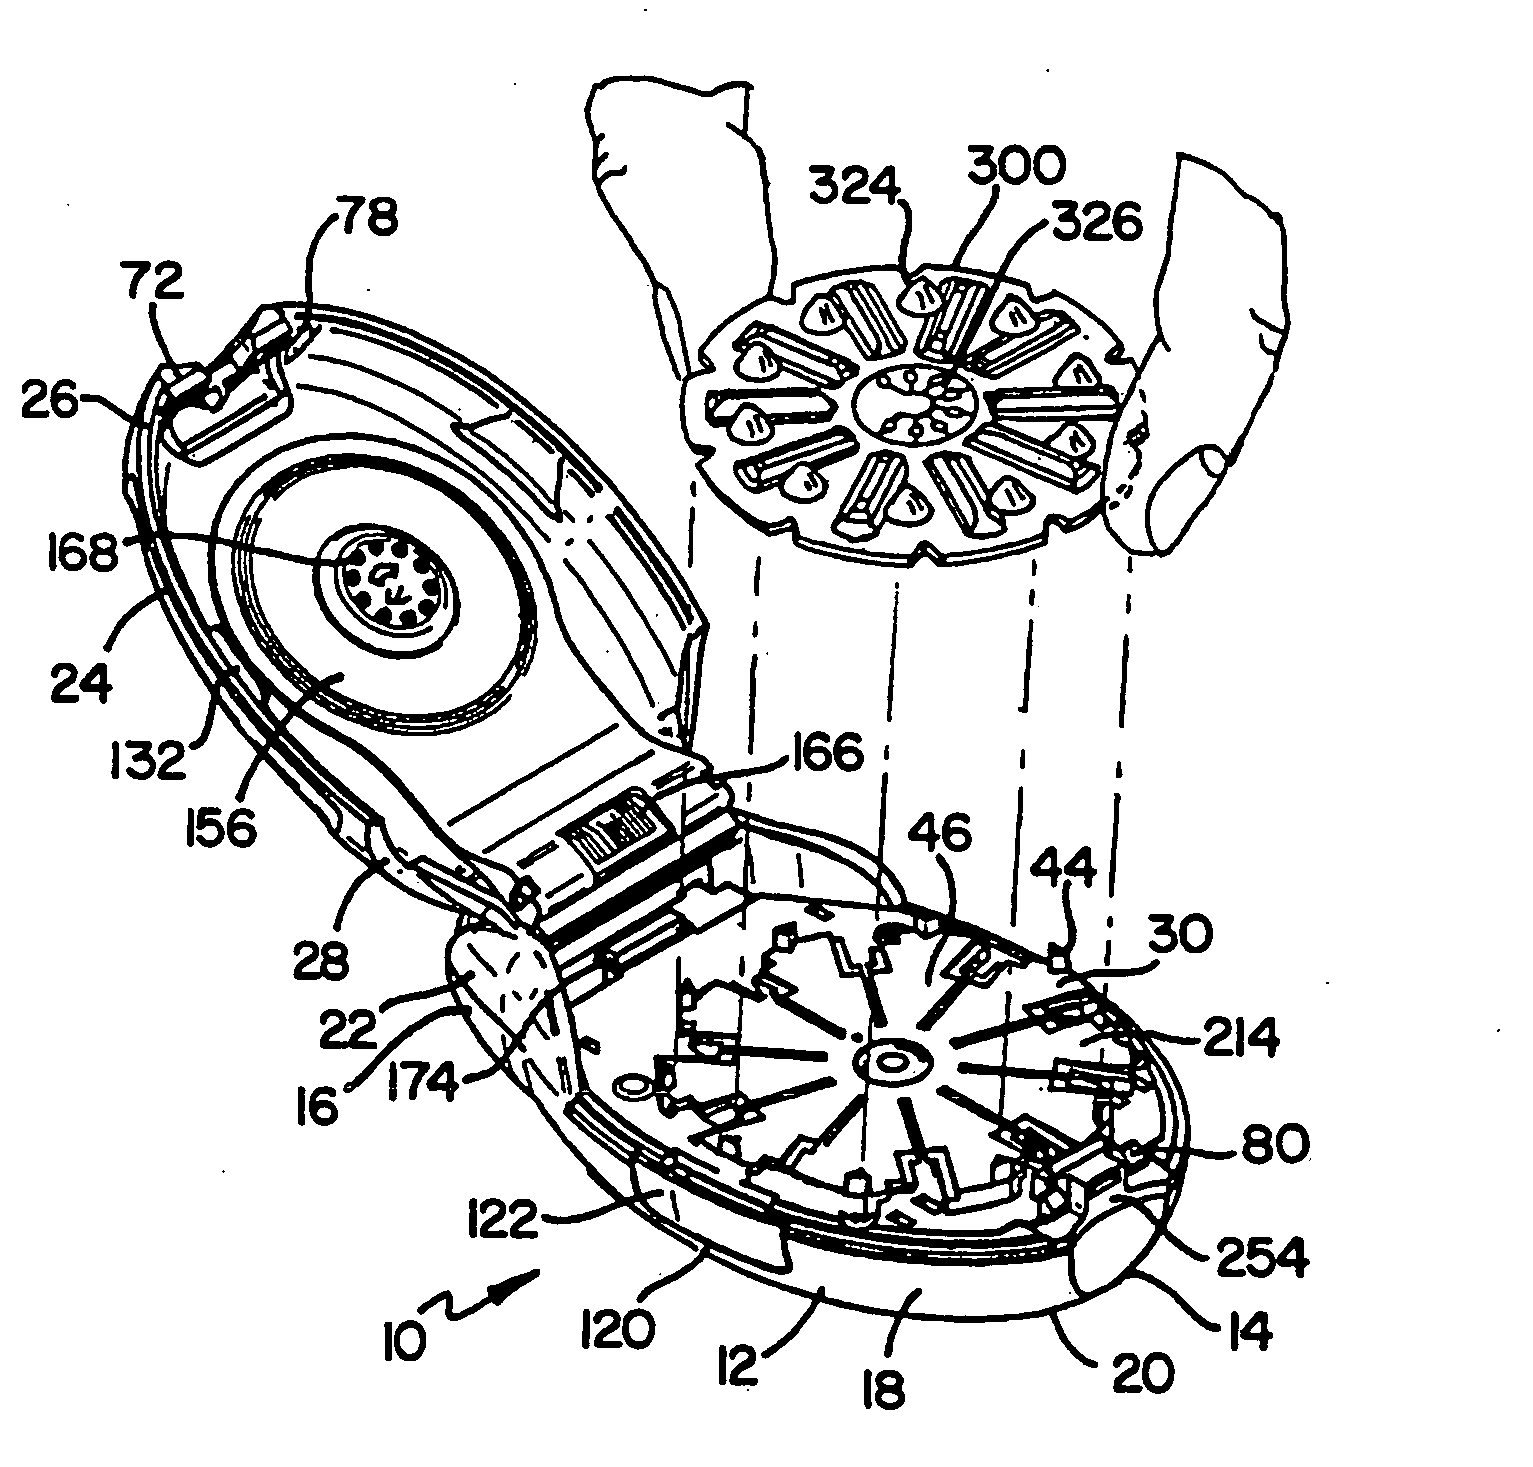 Mechanical mechanism for a sensor-dispensing instrument